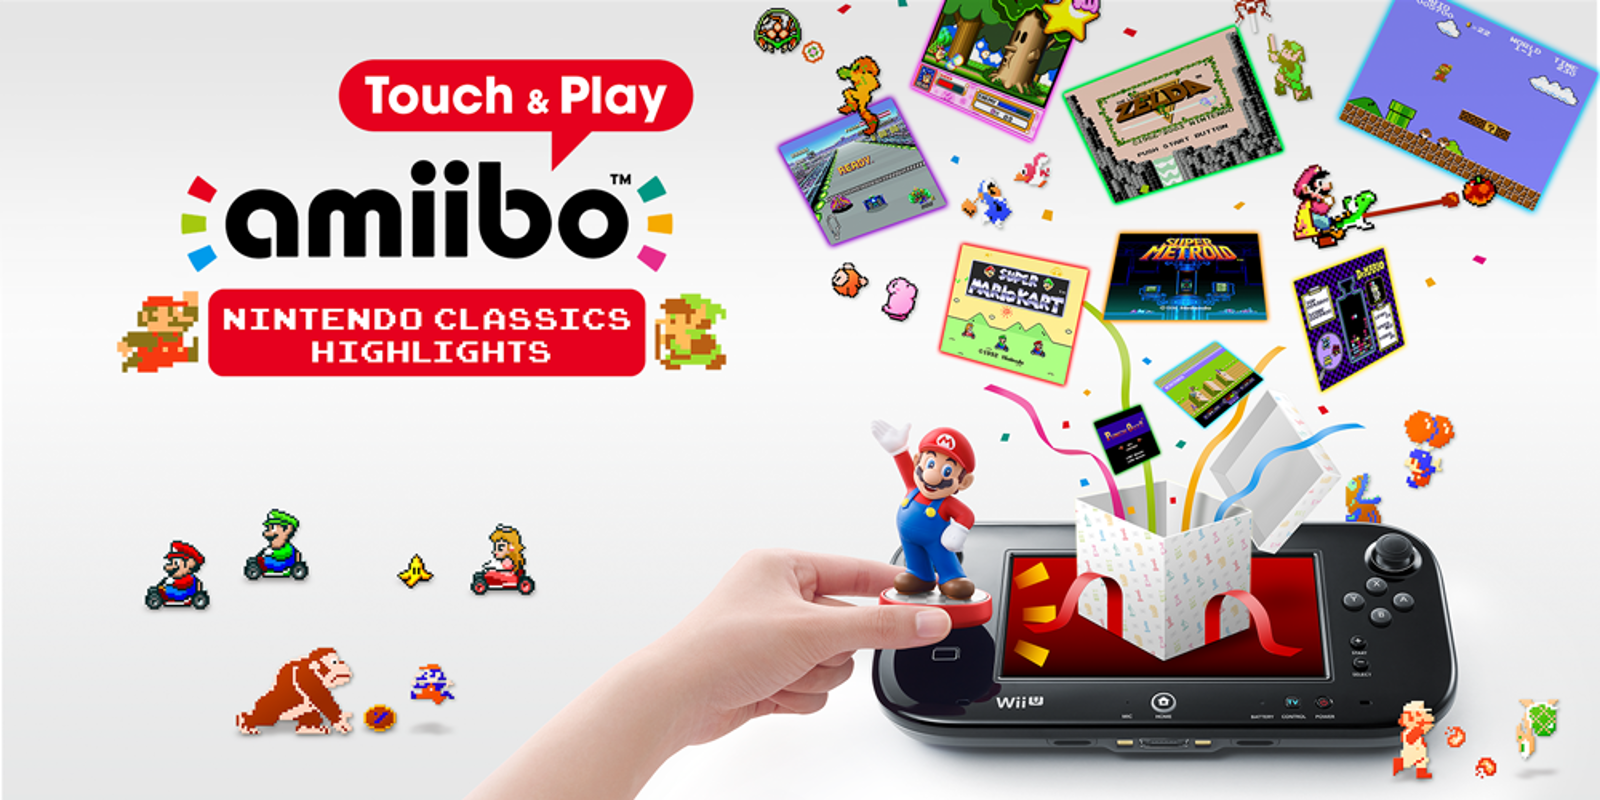 Spreekwoord badminton Geval amiibo Touch & Play: Nintendo Classics Highlights | Wii U download software  | Games | Nintendo